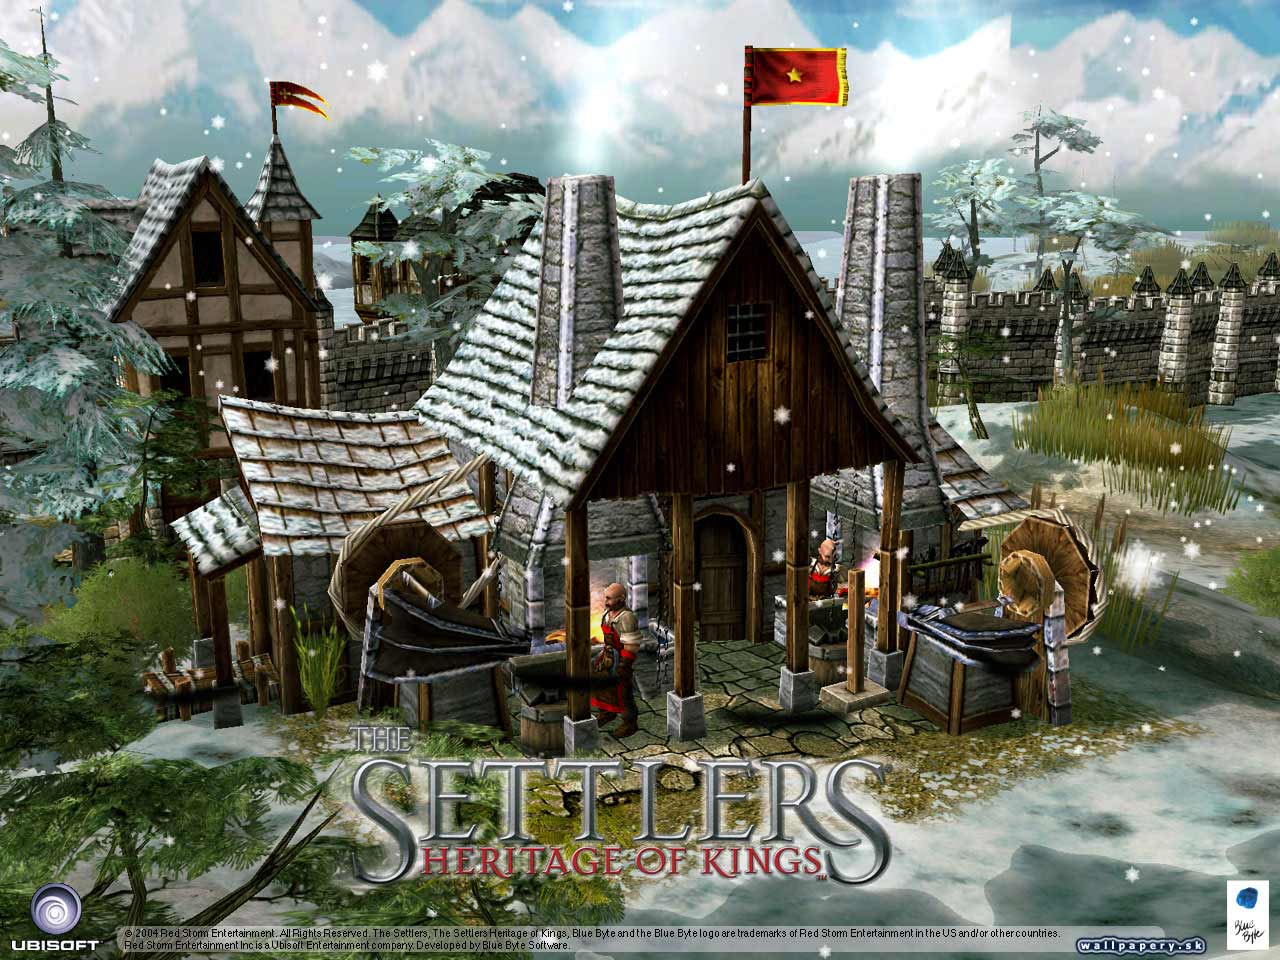 Settlers 5: Heritage of Kings - wallpaper 4